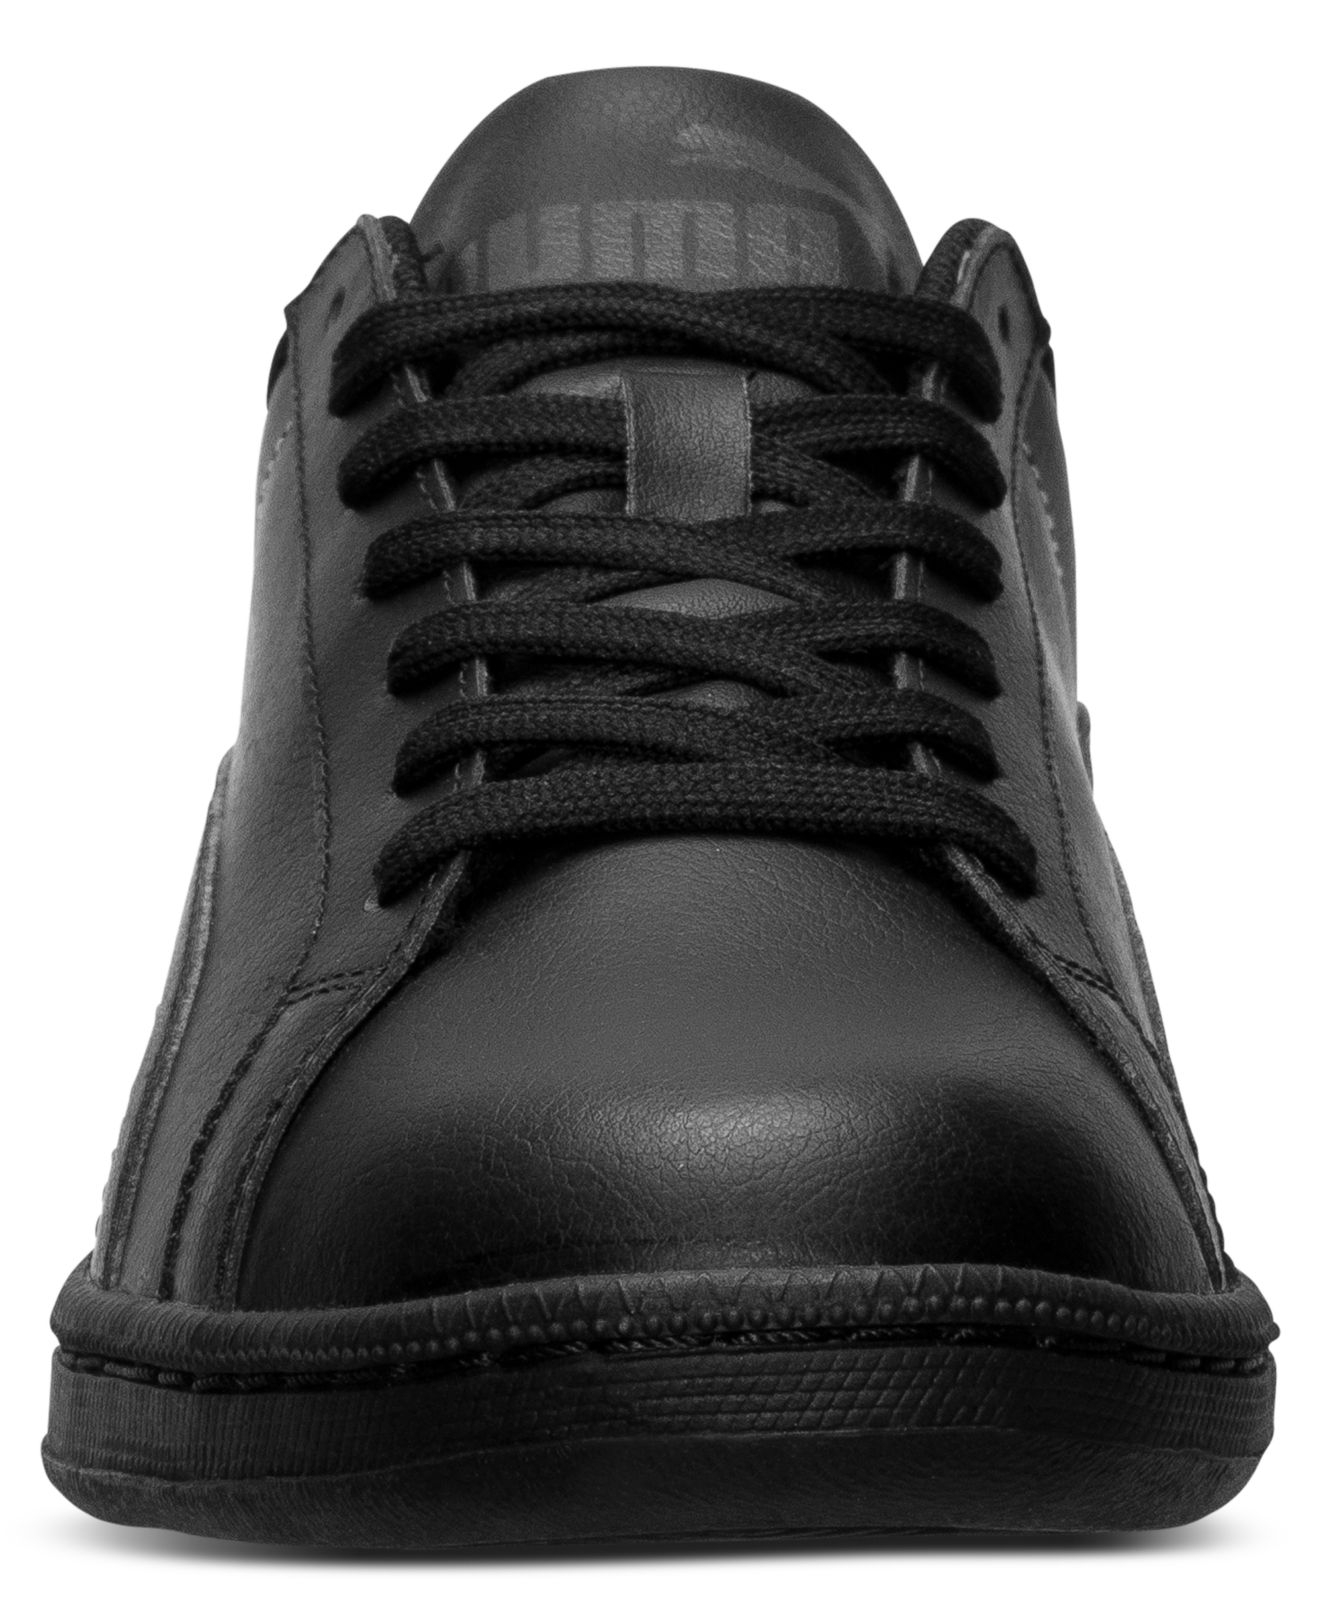 Black Shoes For Men - Skechers Men's Sparta 2.0 Athletic Shoe - Black ...